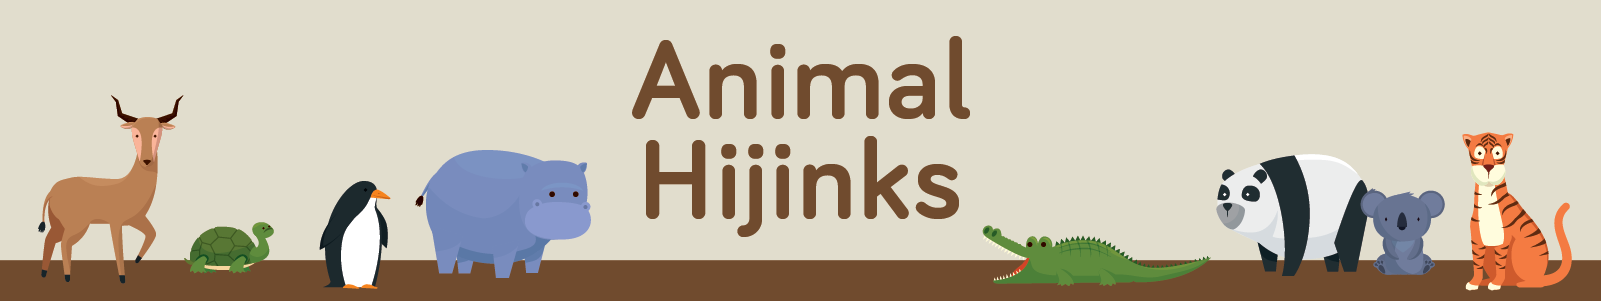 Animal Hijinks banner graphic